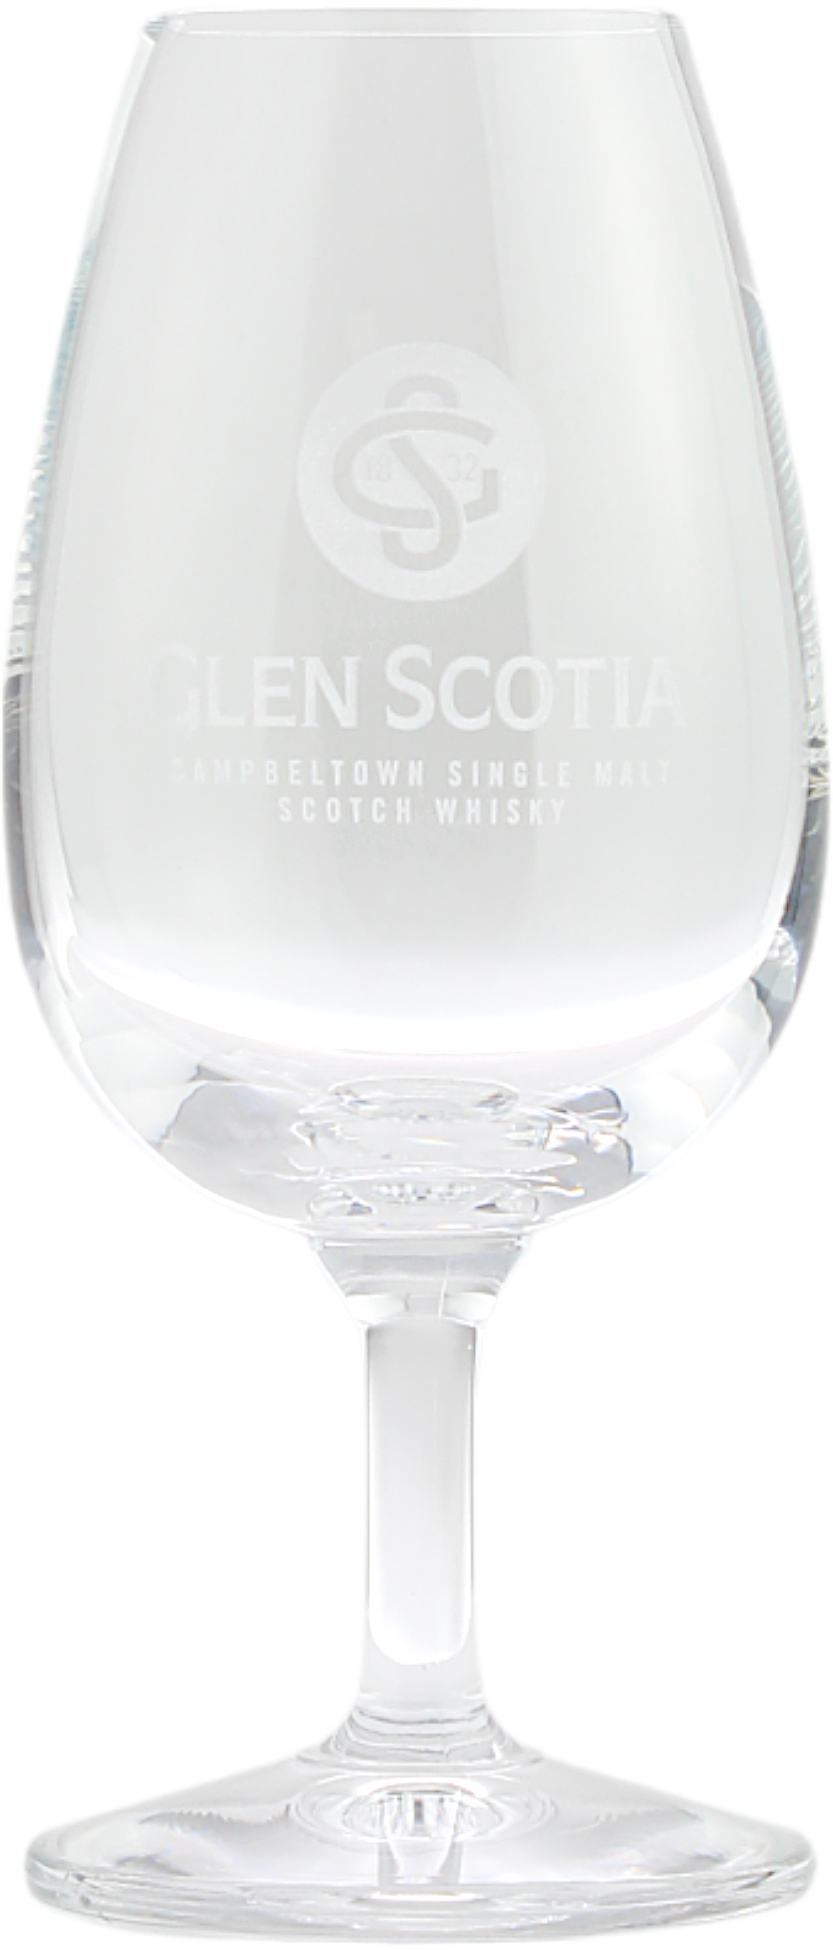 Glen Scotia Nosing Glas